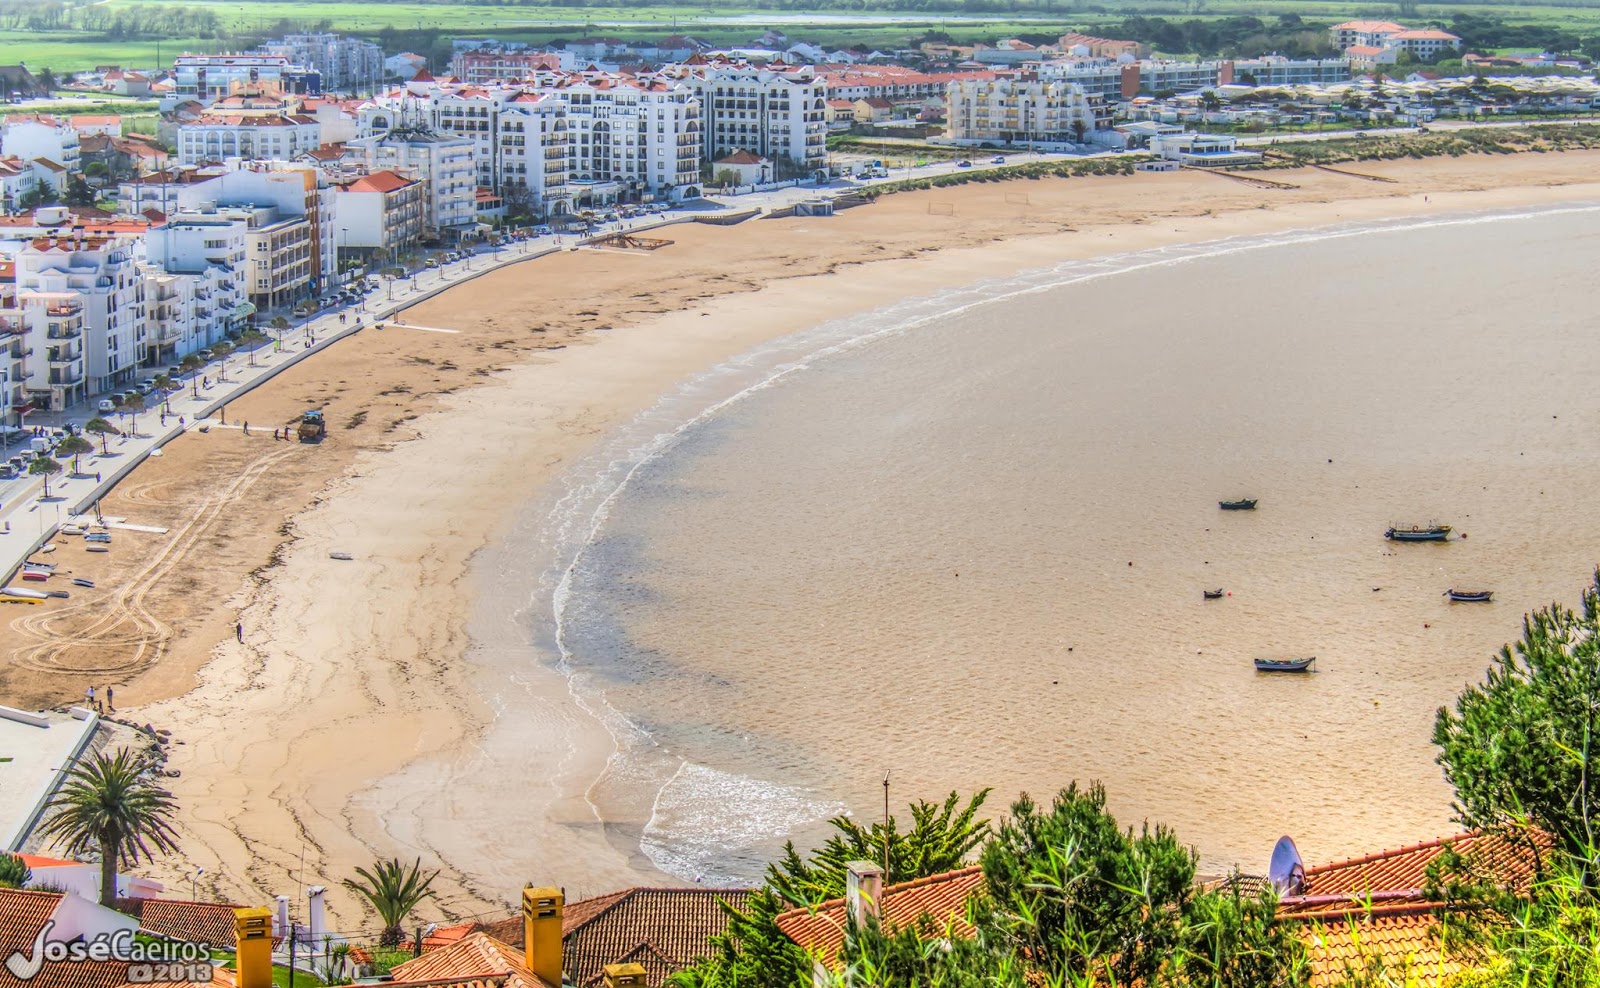 Fotografija Sao Martinho do Porto z dolg zaliv